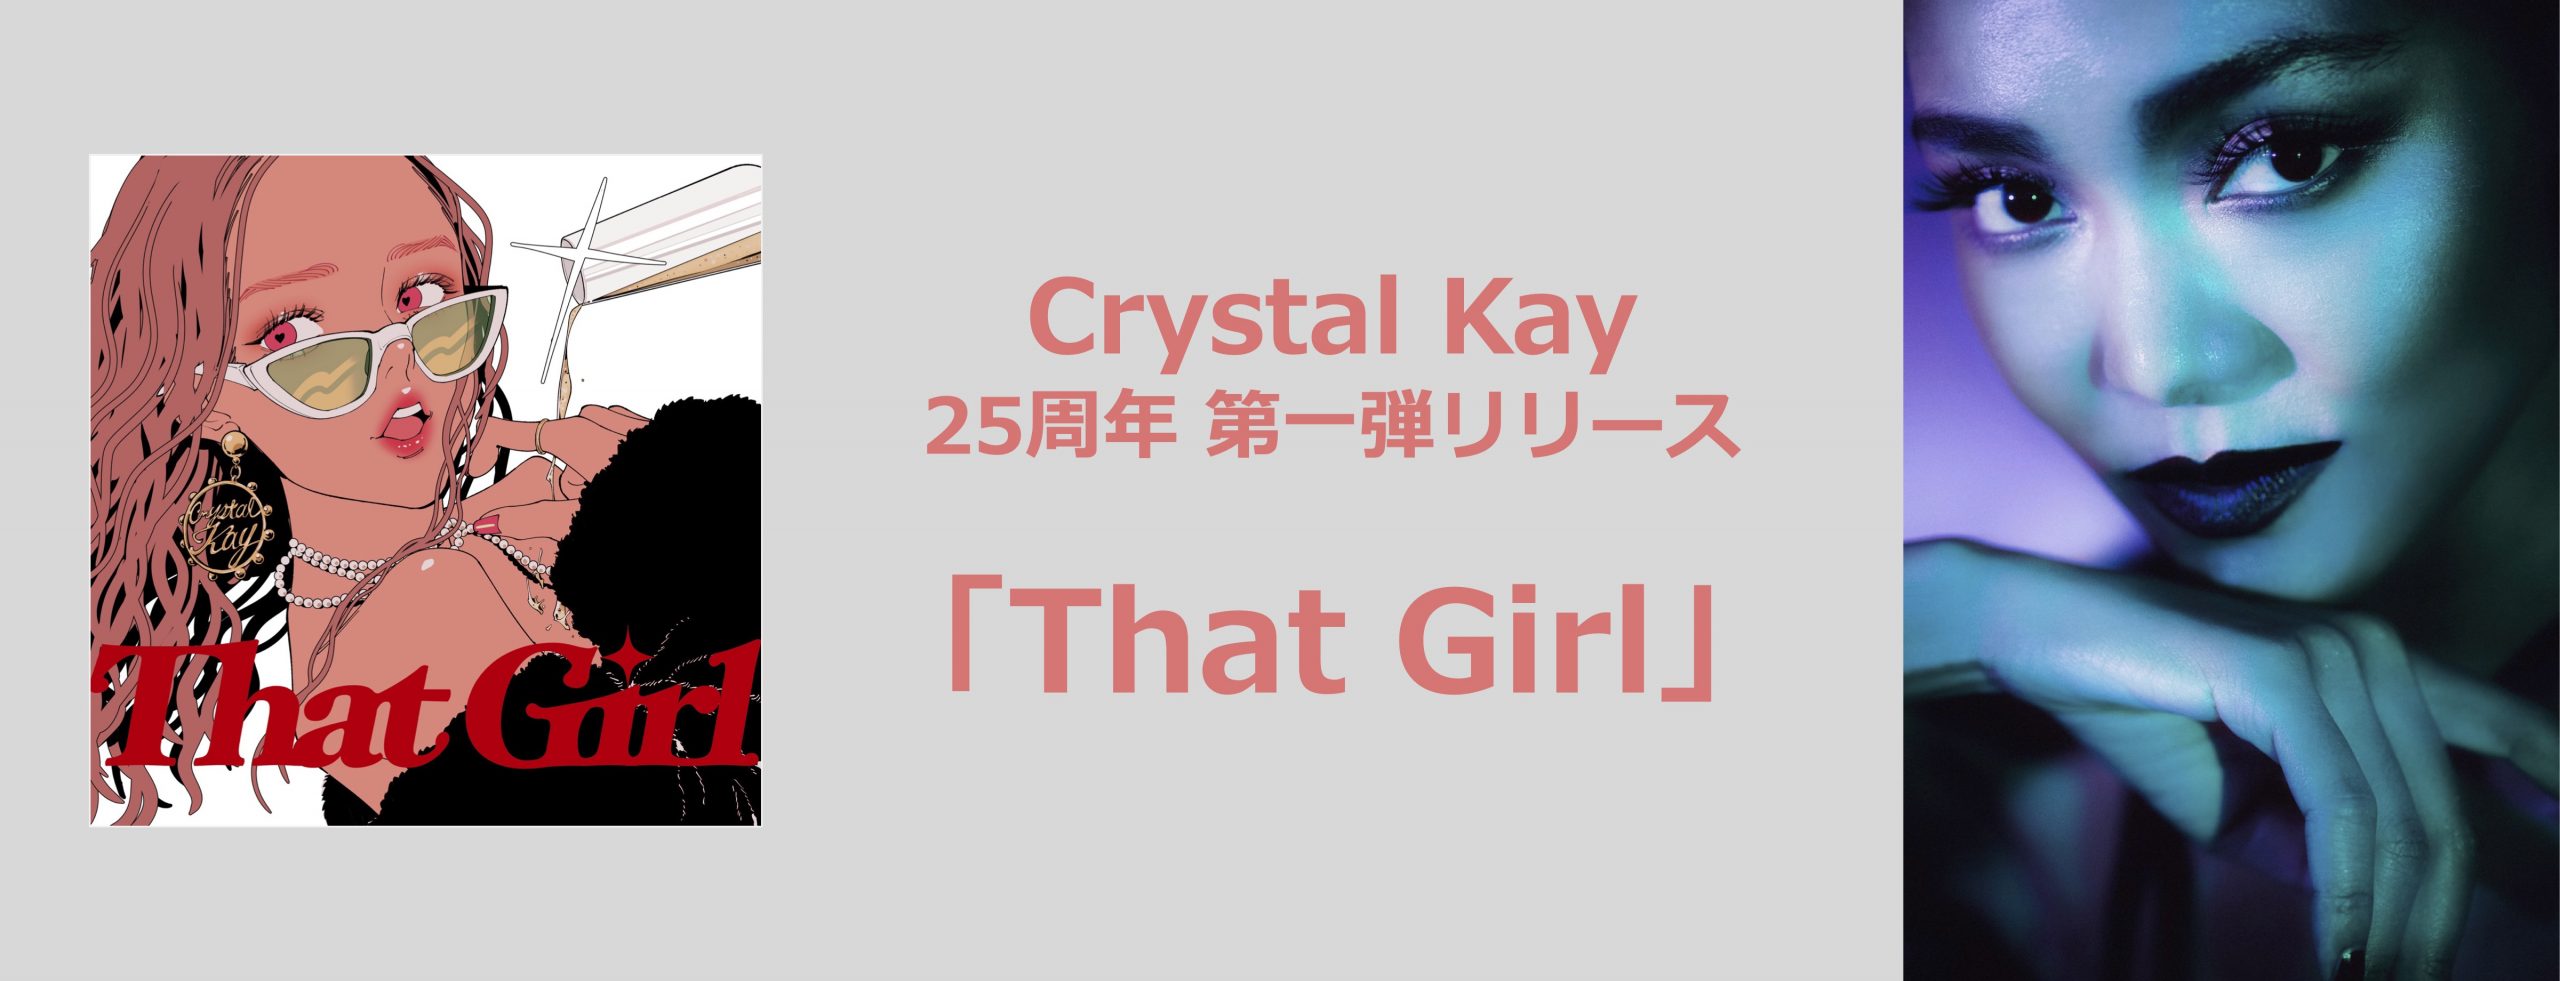 REVOLUTION [初回盤][CD MAXI][+DVD] - Crystal Kay feat.安室奈美恵 